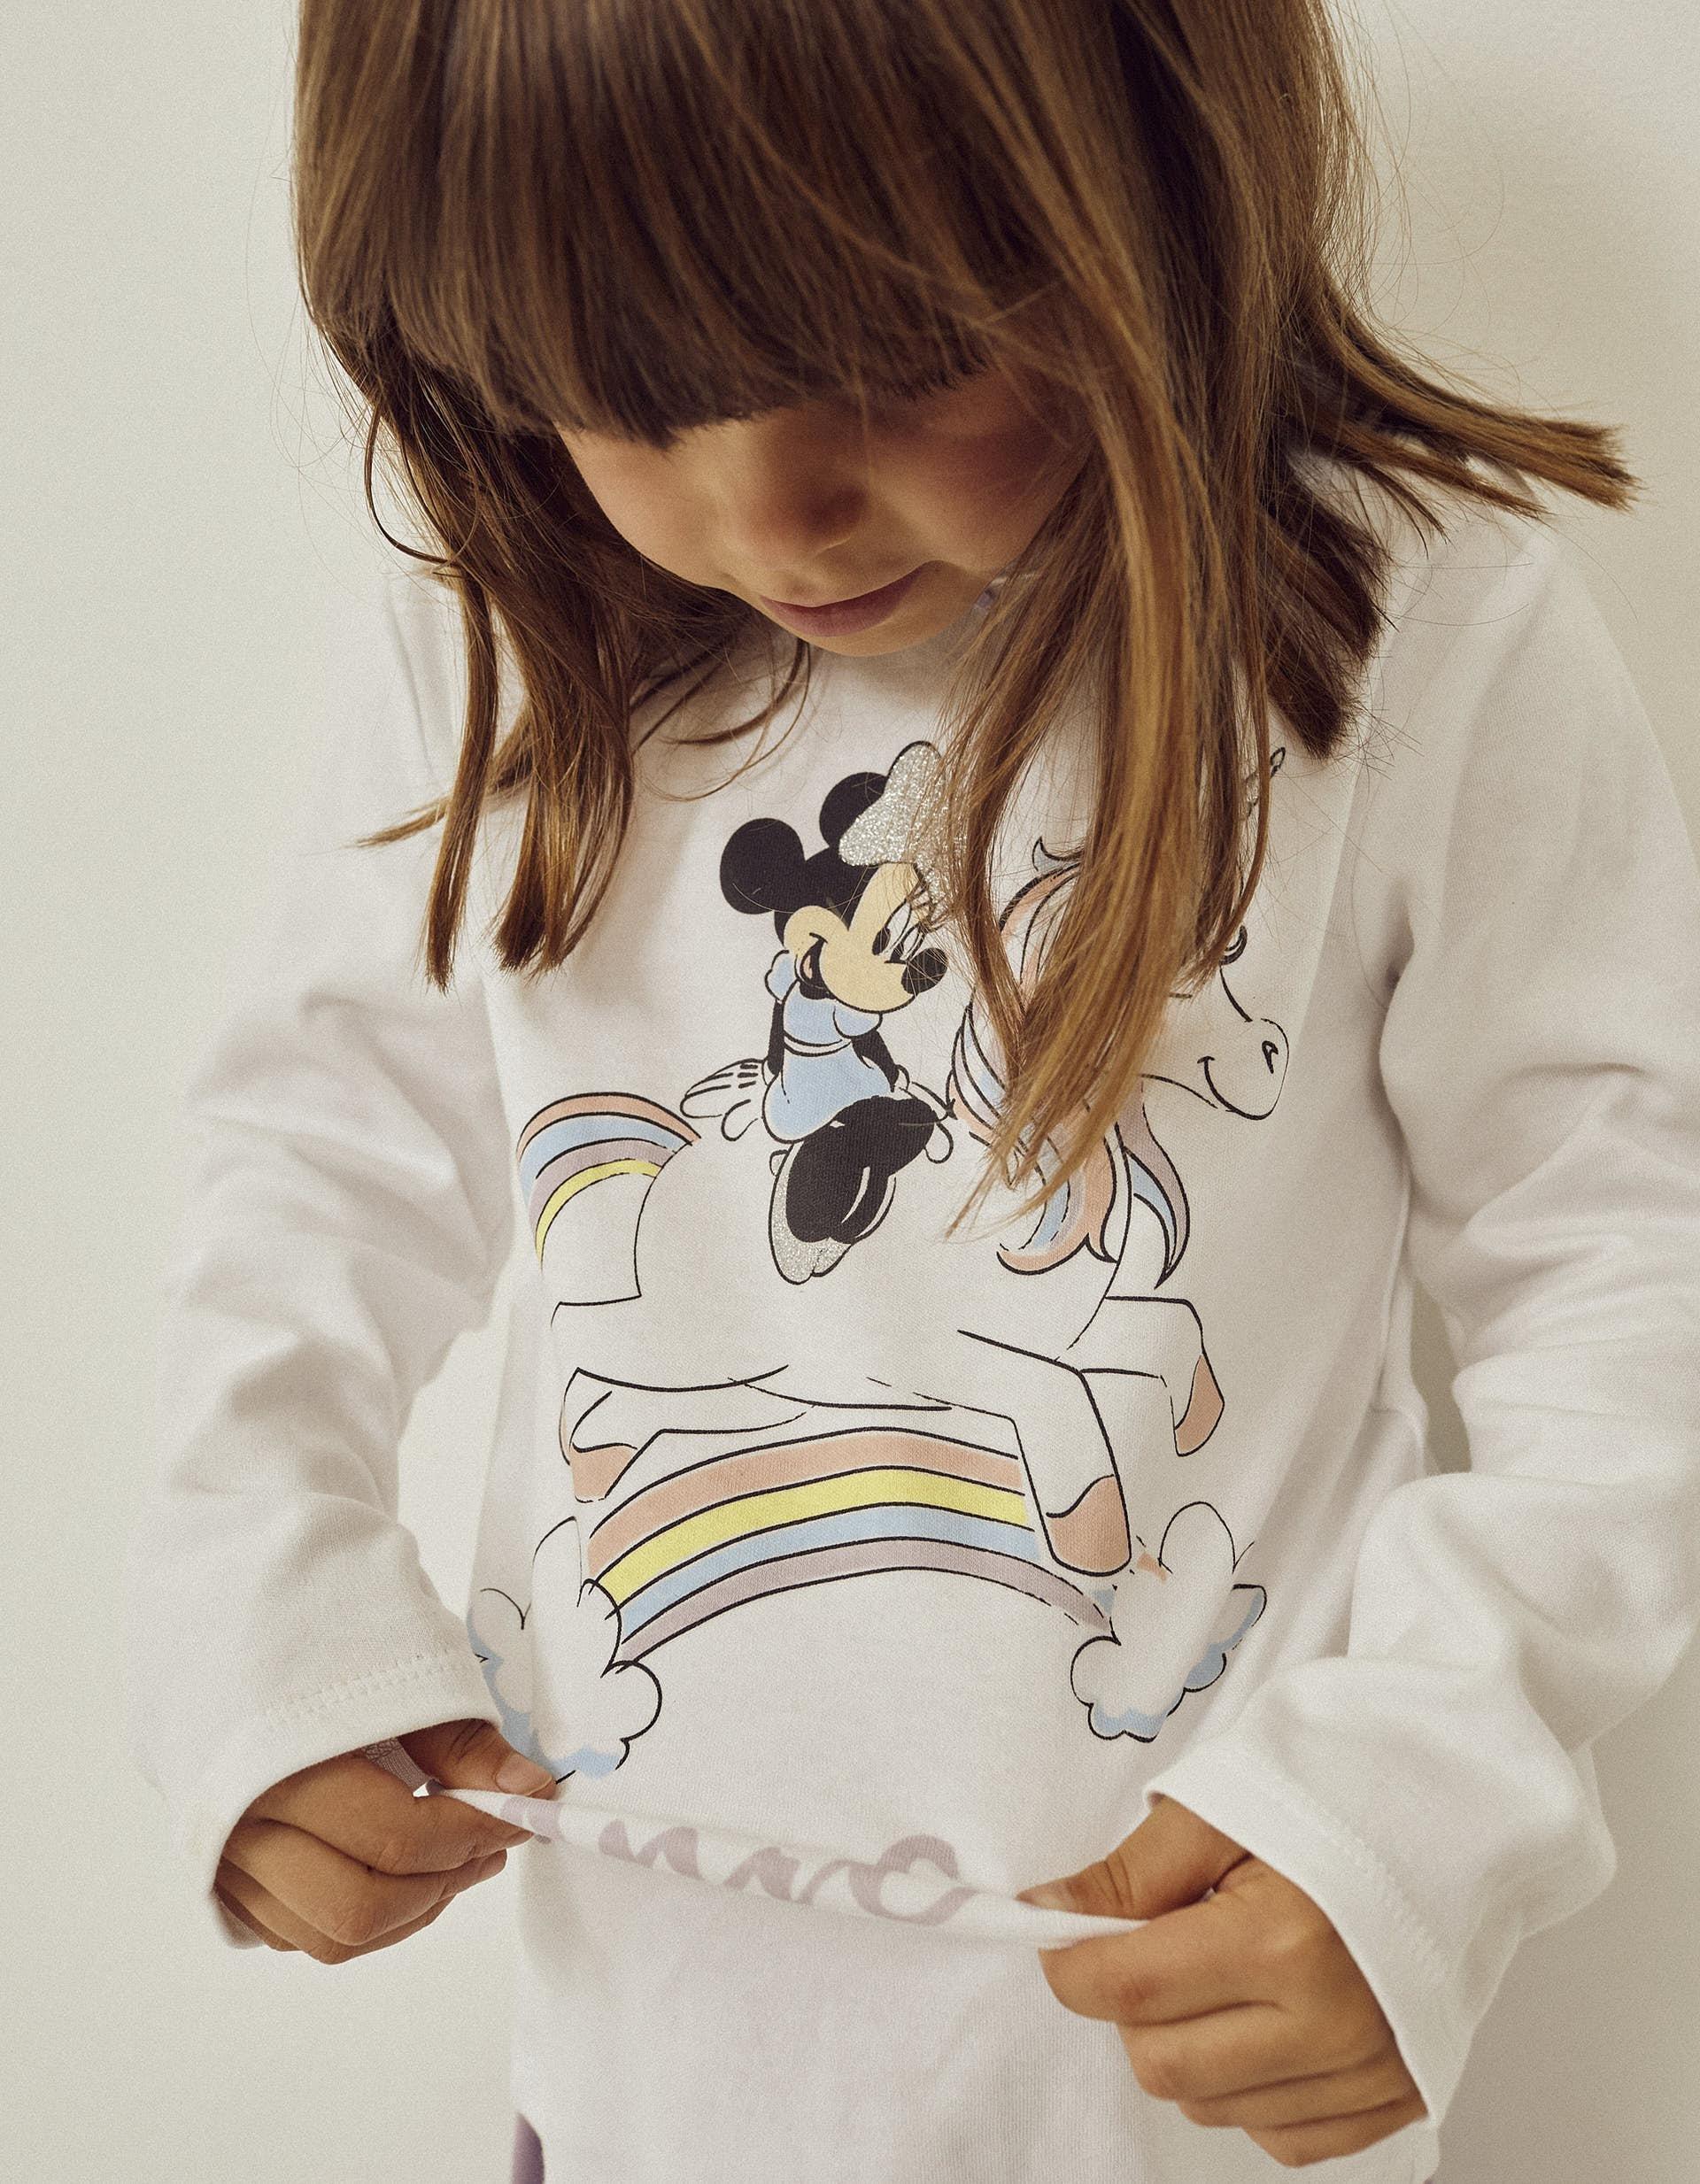 Gant - Multicolour Printed Cotton Pyjamas, Kids Girls